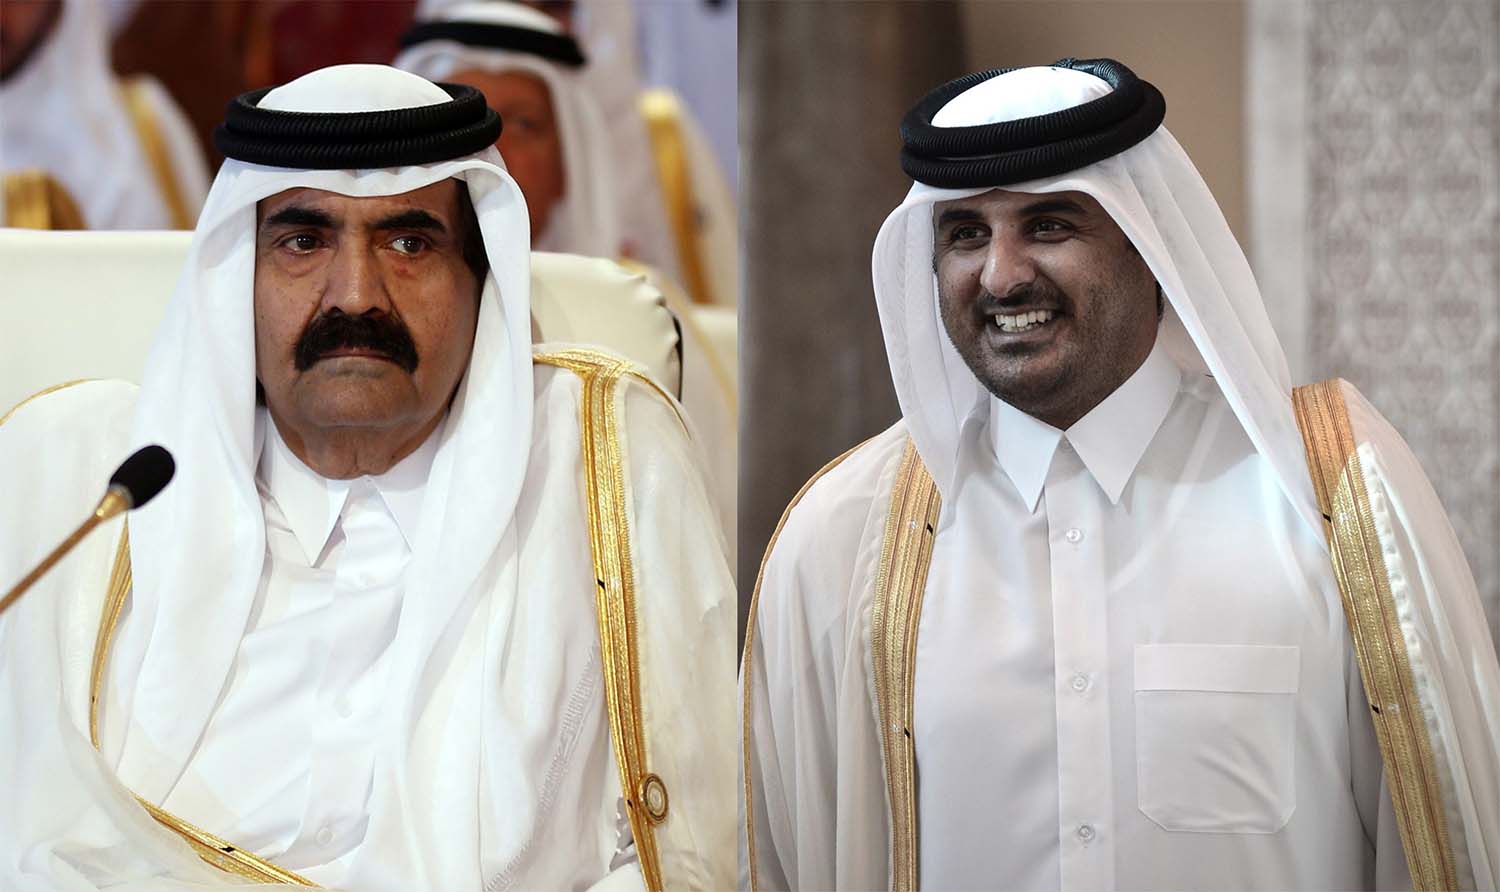 Qatari Emir's father Sheikh Hamad bin Khalifa al-Thani (R) and Sheikh Tamim